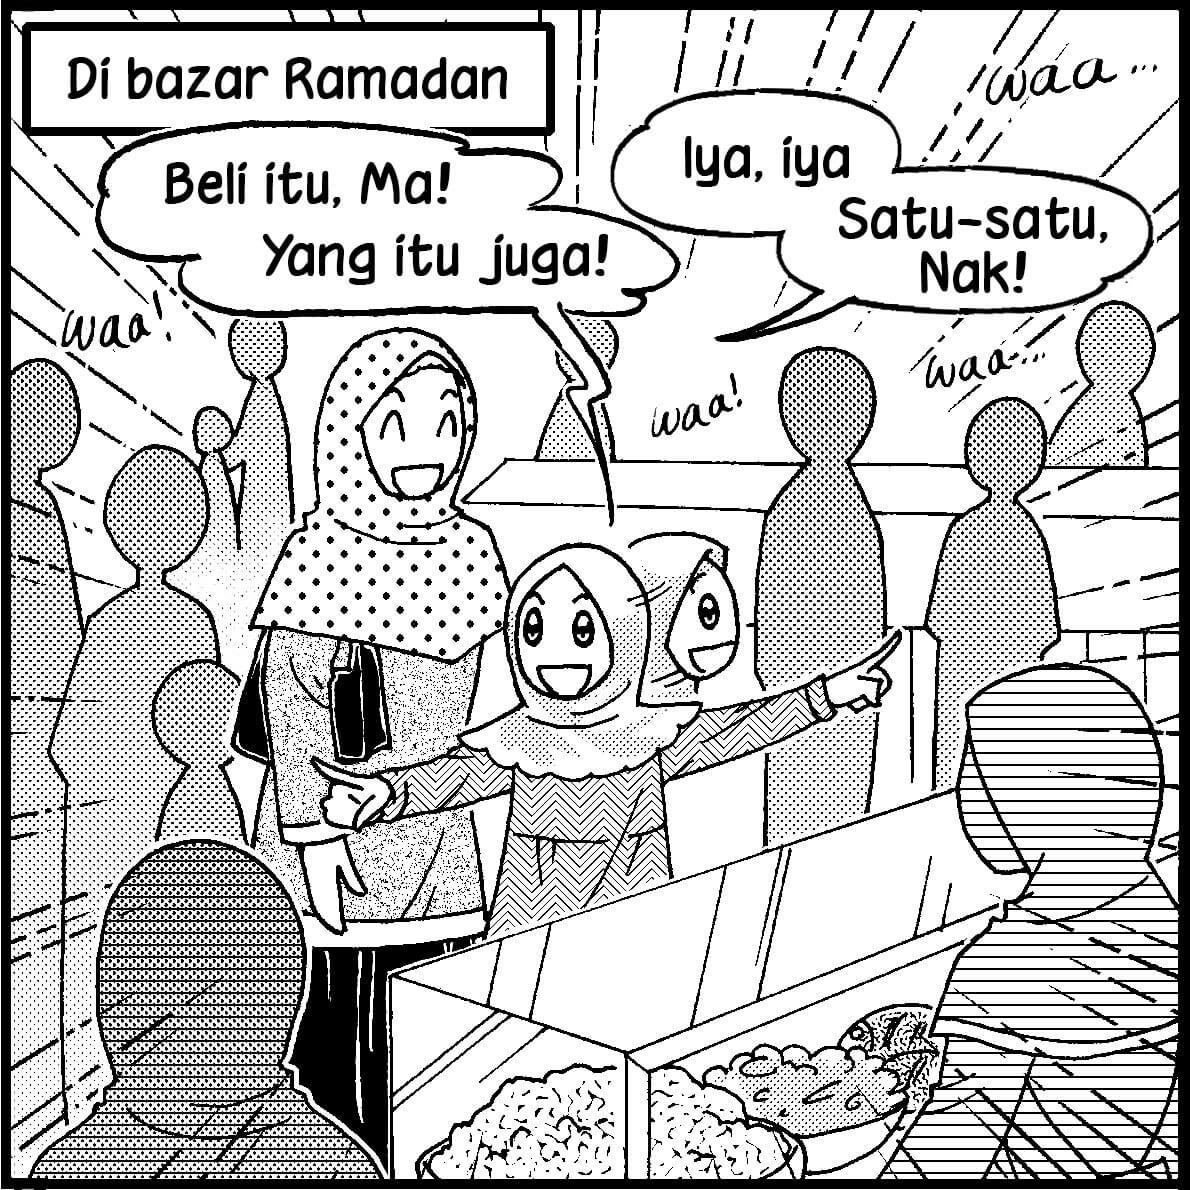 bazar ramadan1